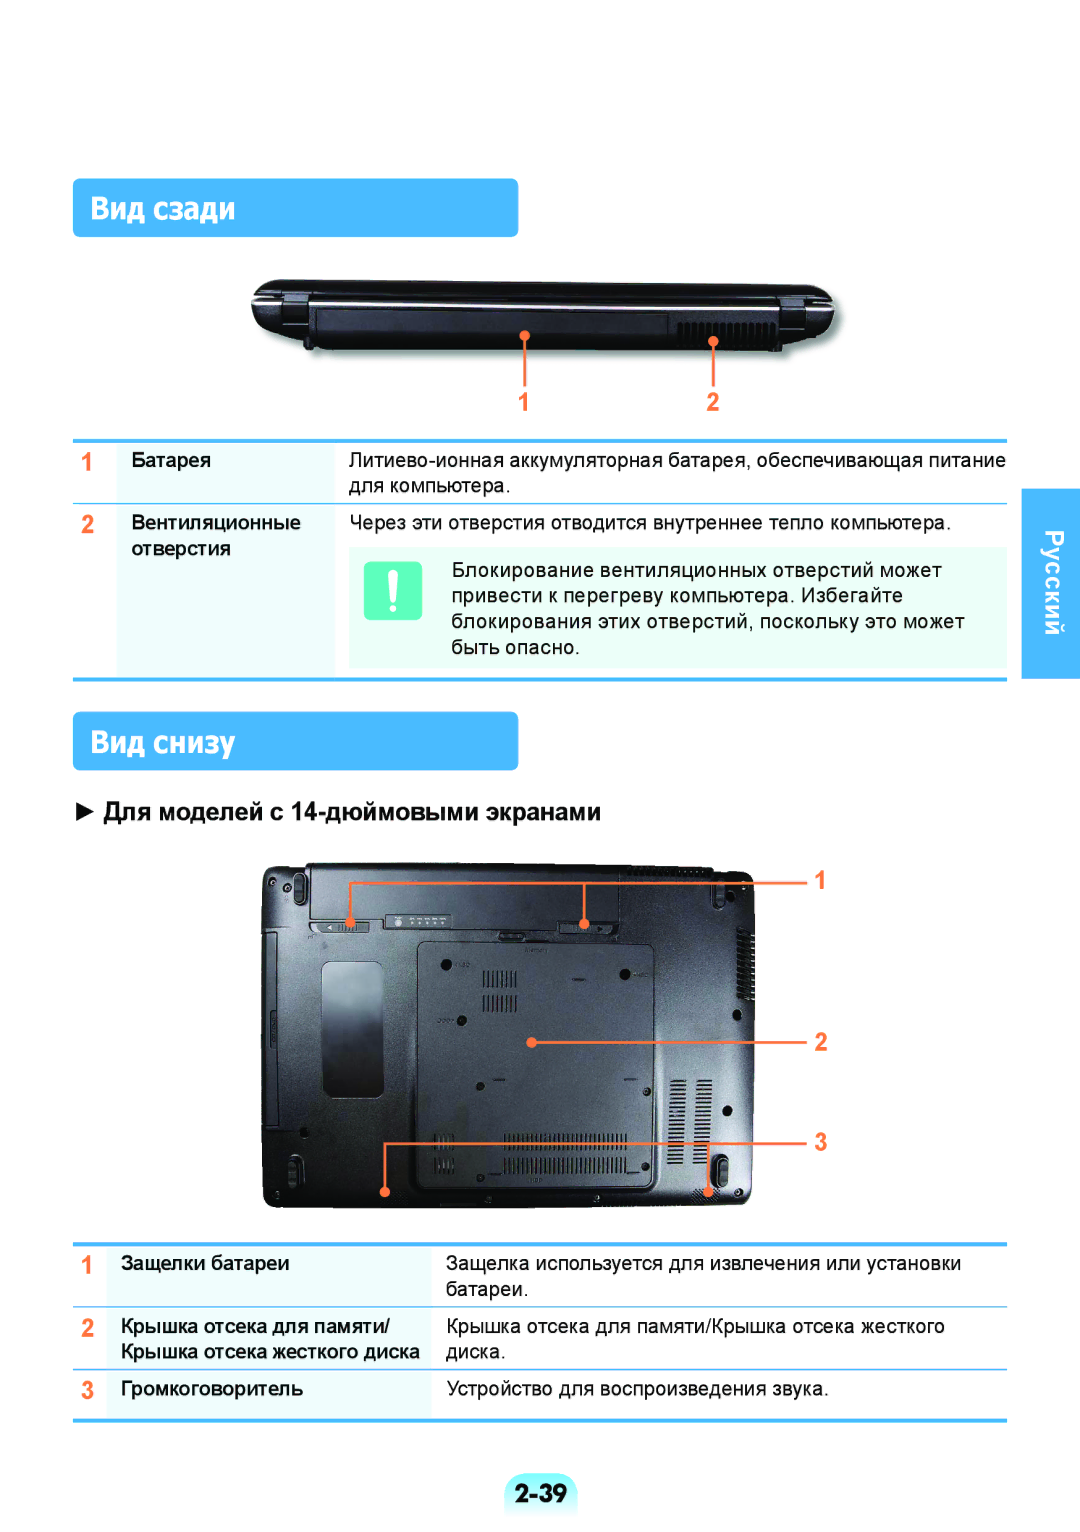 Samsung NP-RV408-A01RU, NP-RV508-A01EE manual Вид сзади, Вид снизу, Отверстия, Диска, Устройство для воспроизведения звука 